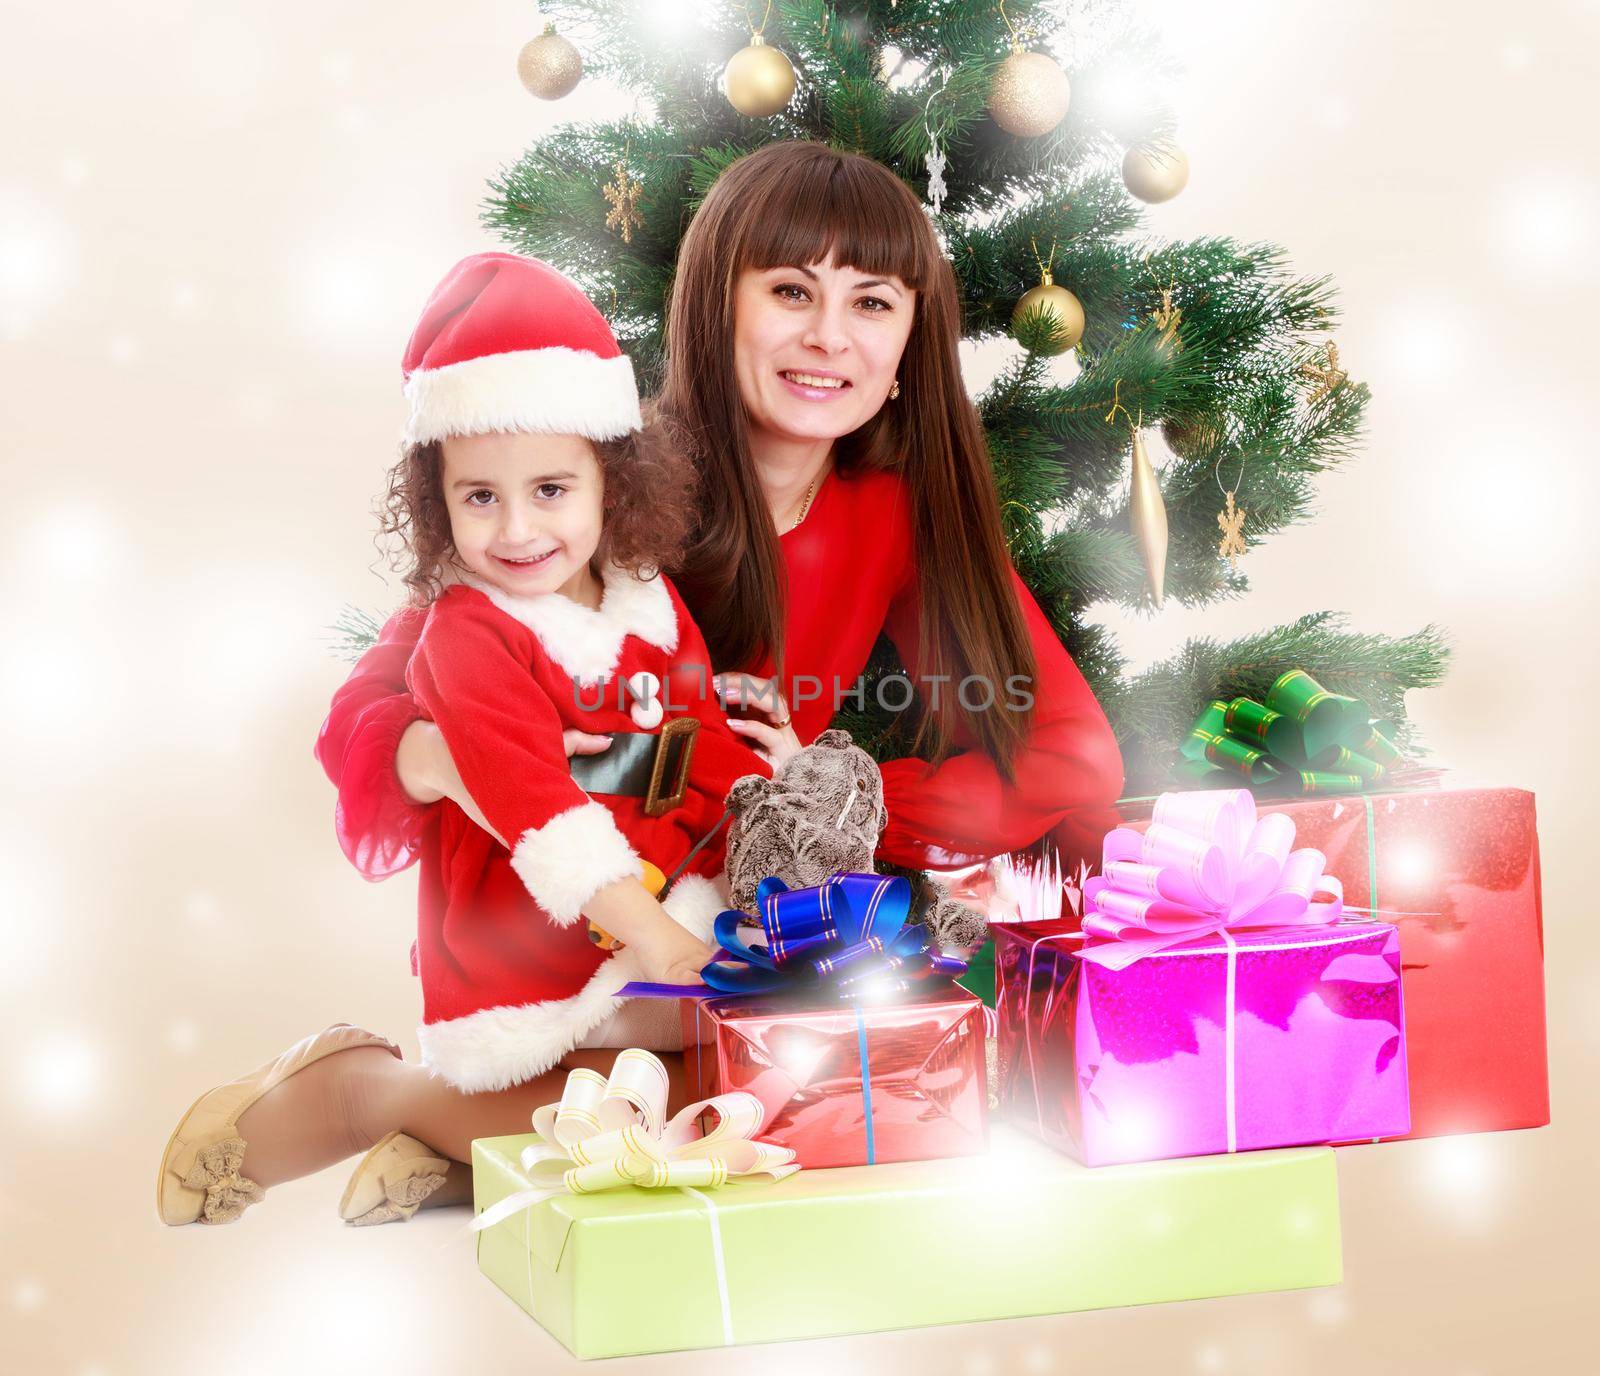 Mother with daughter near the Christmas tree by kolesnikov_studio